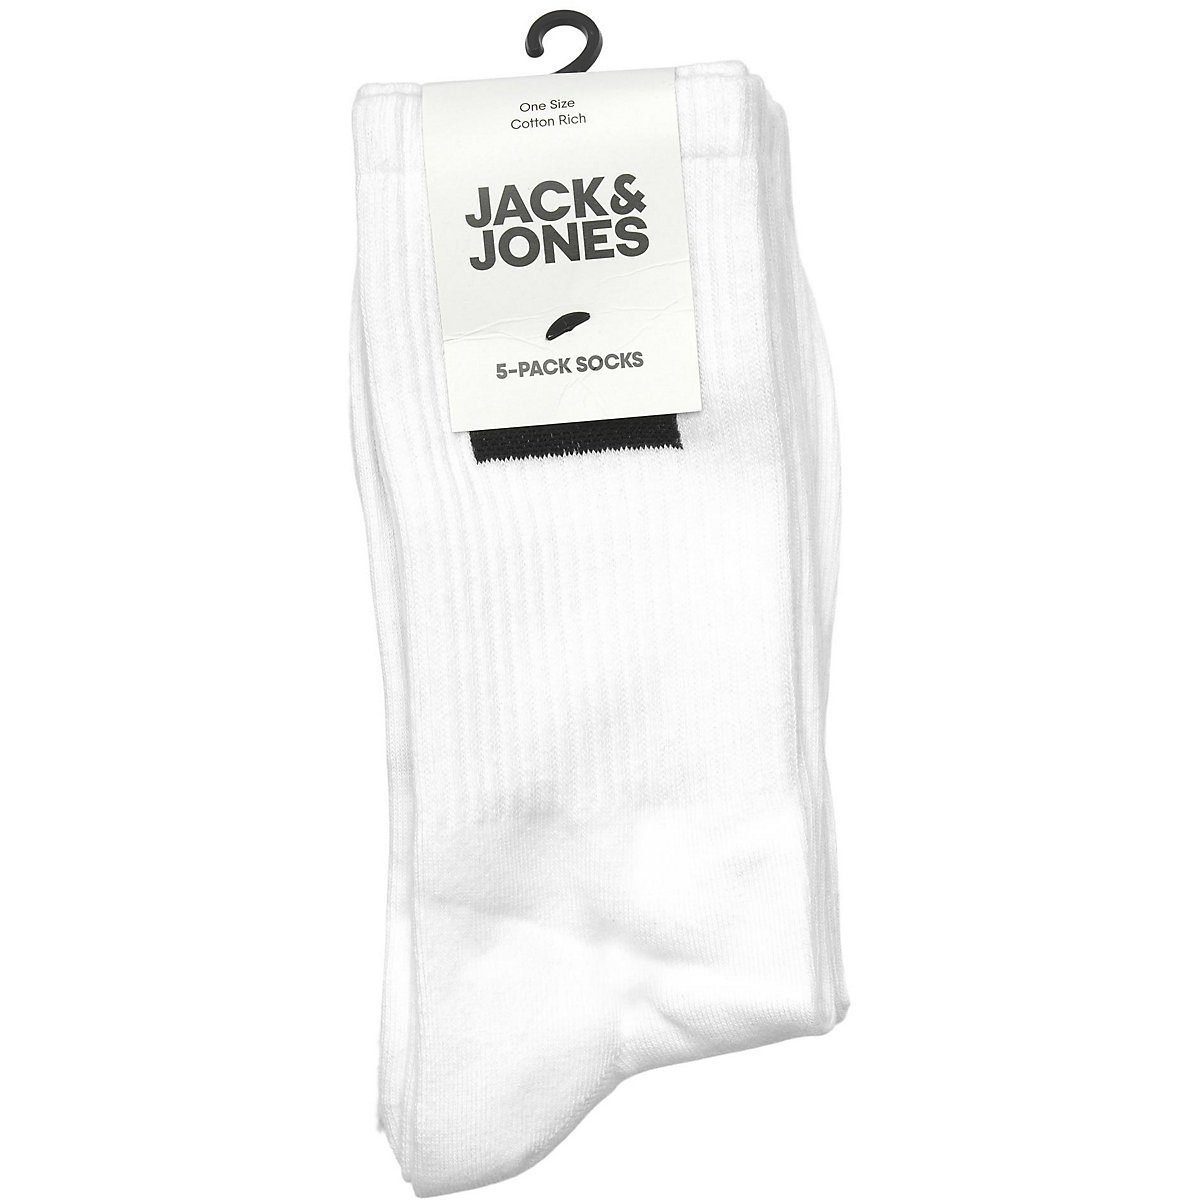 Kinder Kinderunterwäsche Jack & Jones Junior Socken Socken JACTHX 5er Pack für Jungen